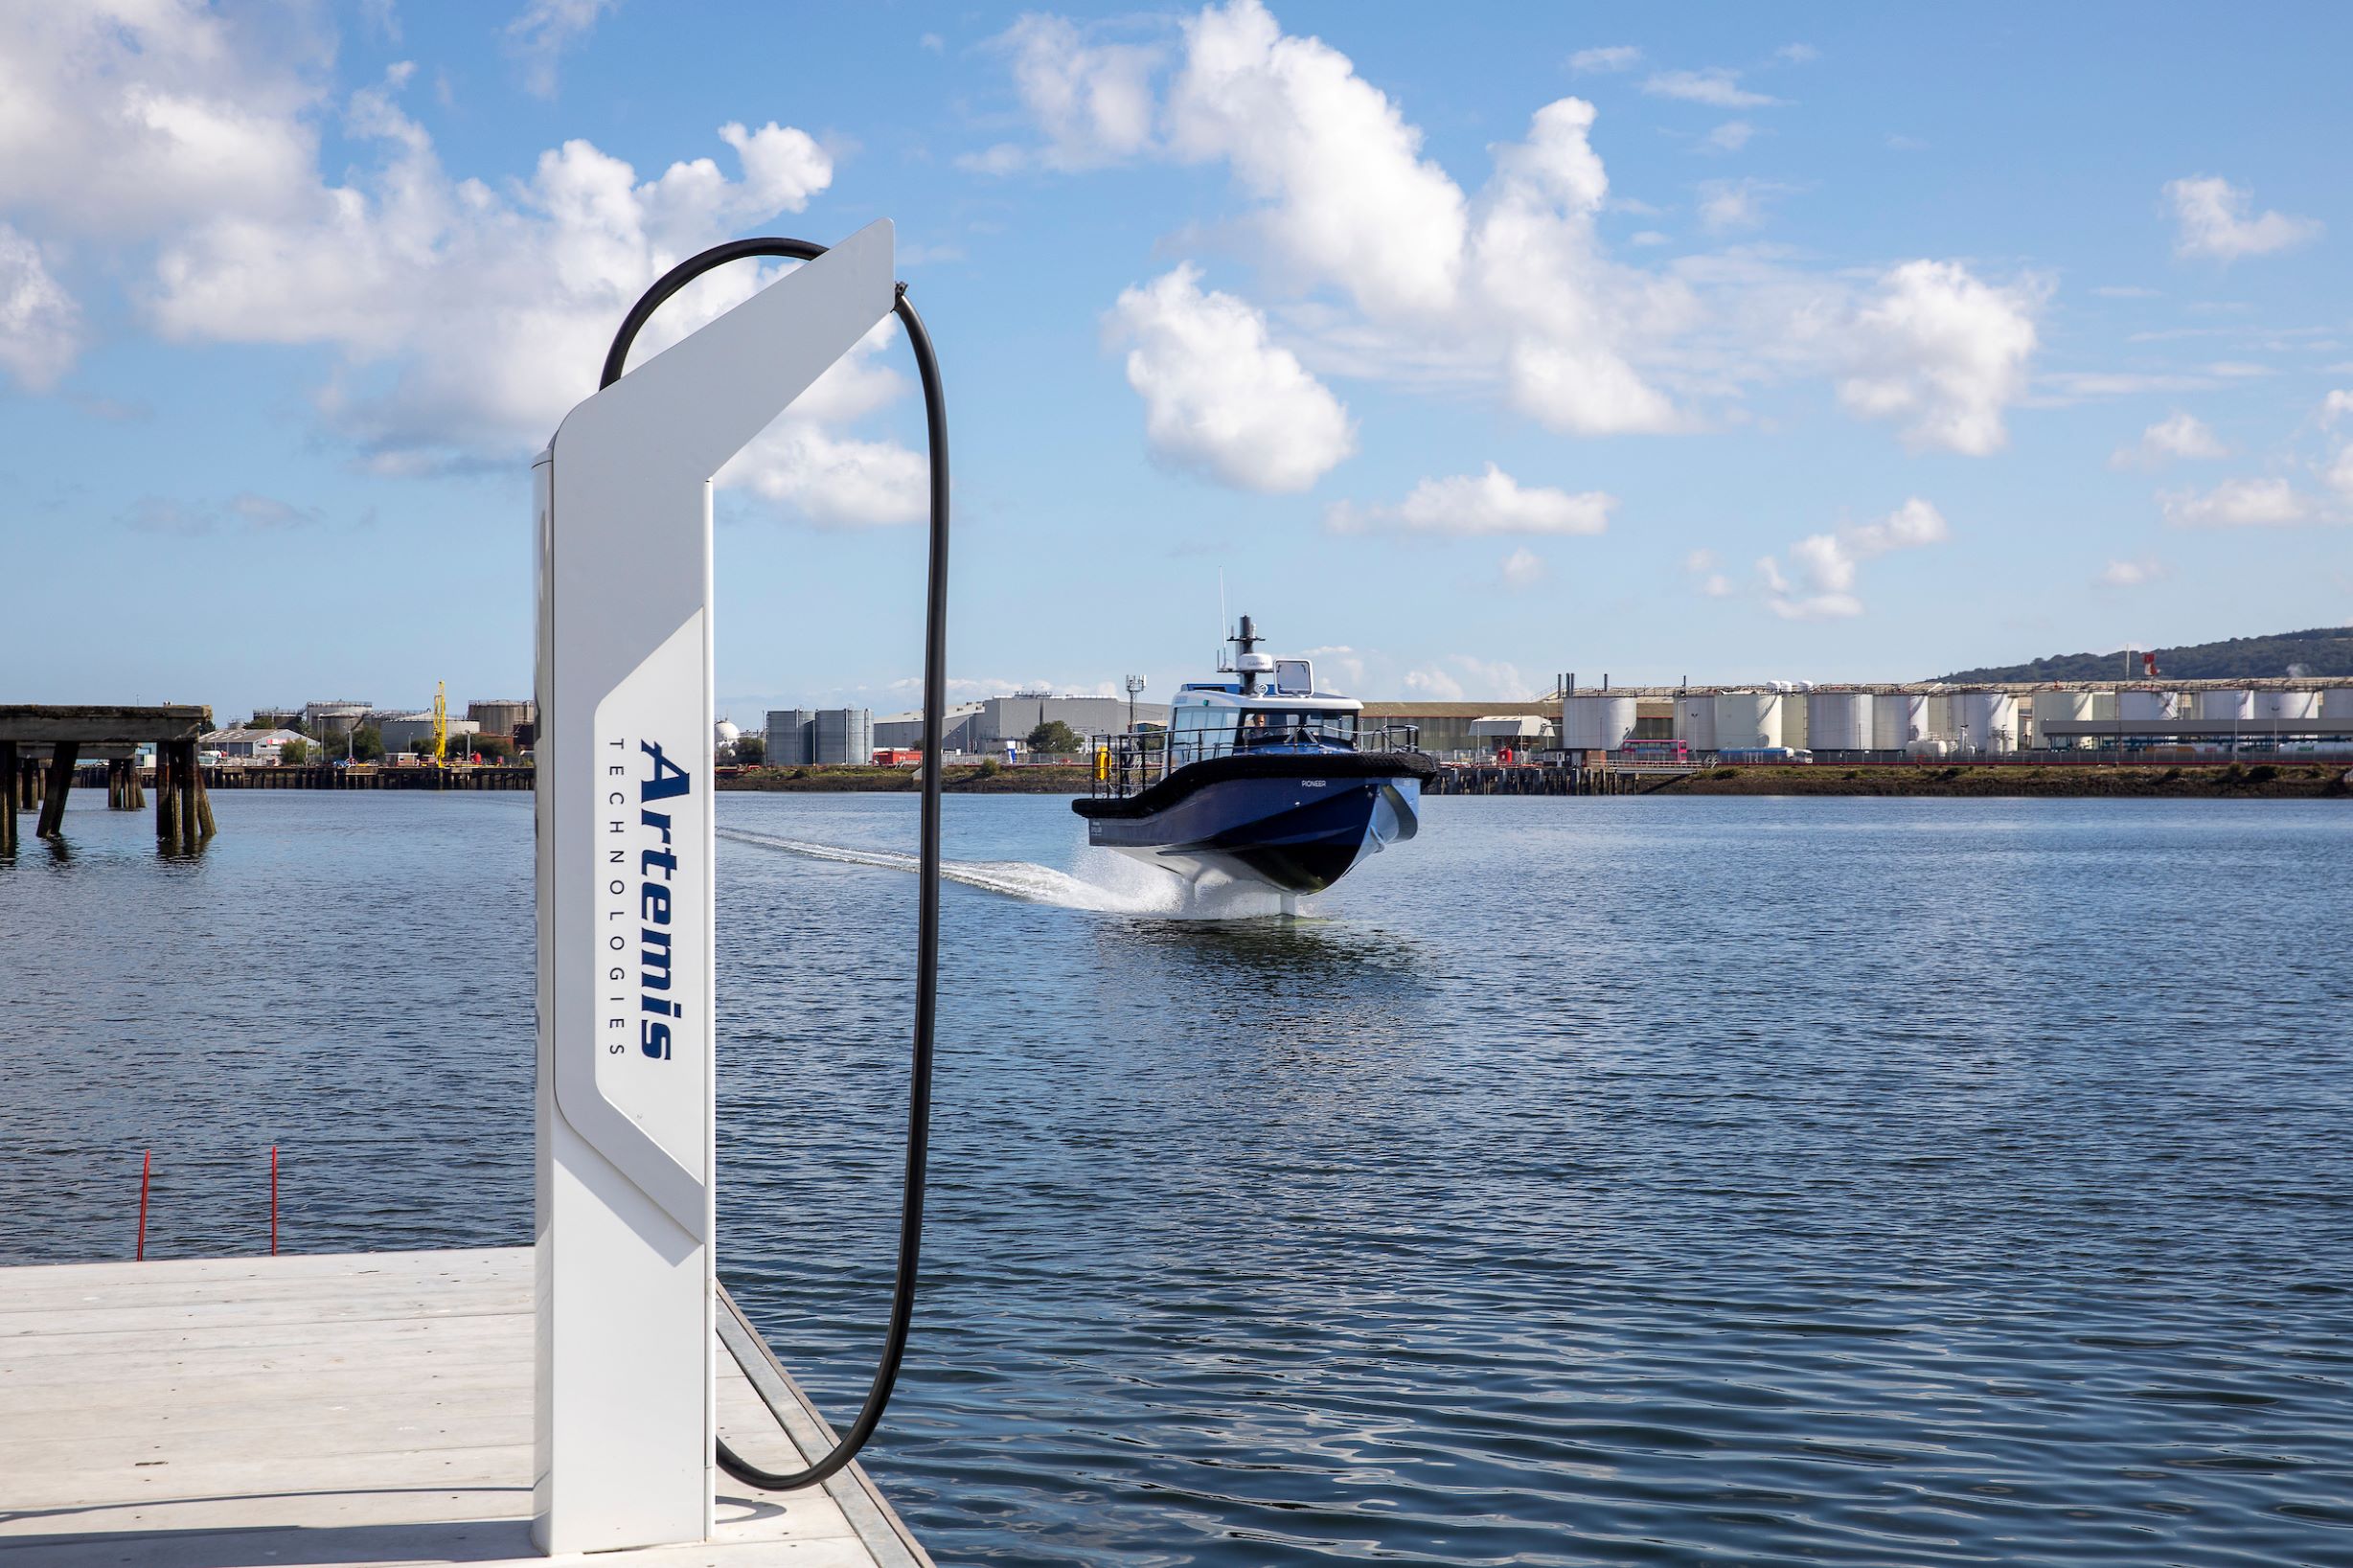 Artemis Technologies EF-12 Workboat foiling past Artemis Technologies charging infastructure